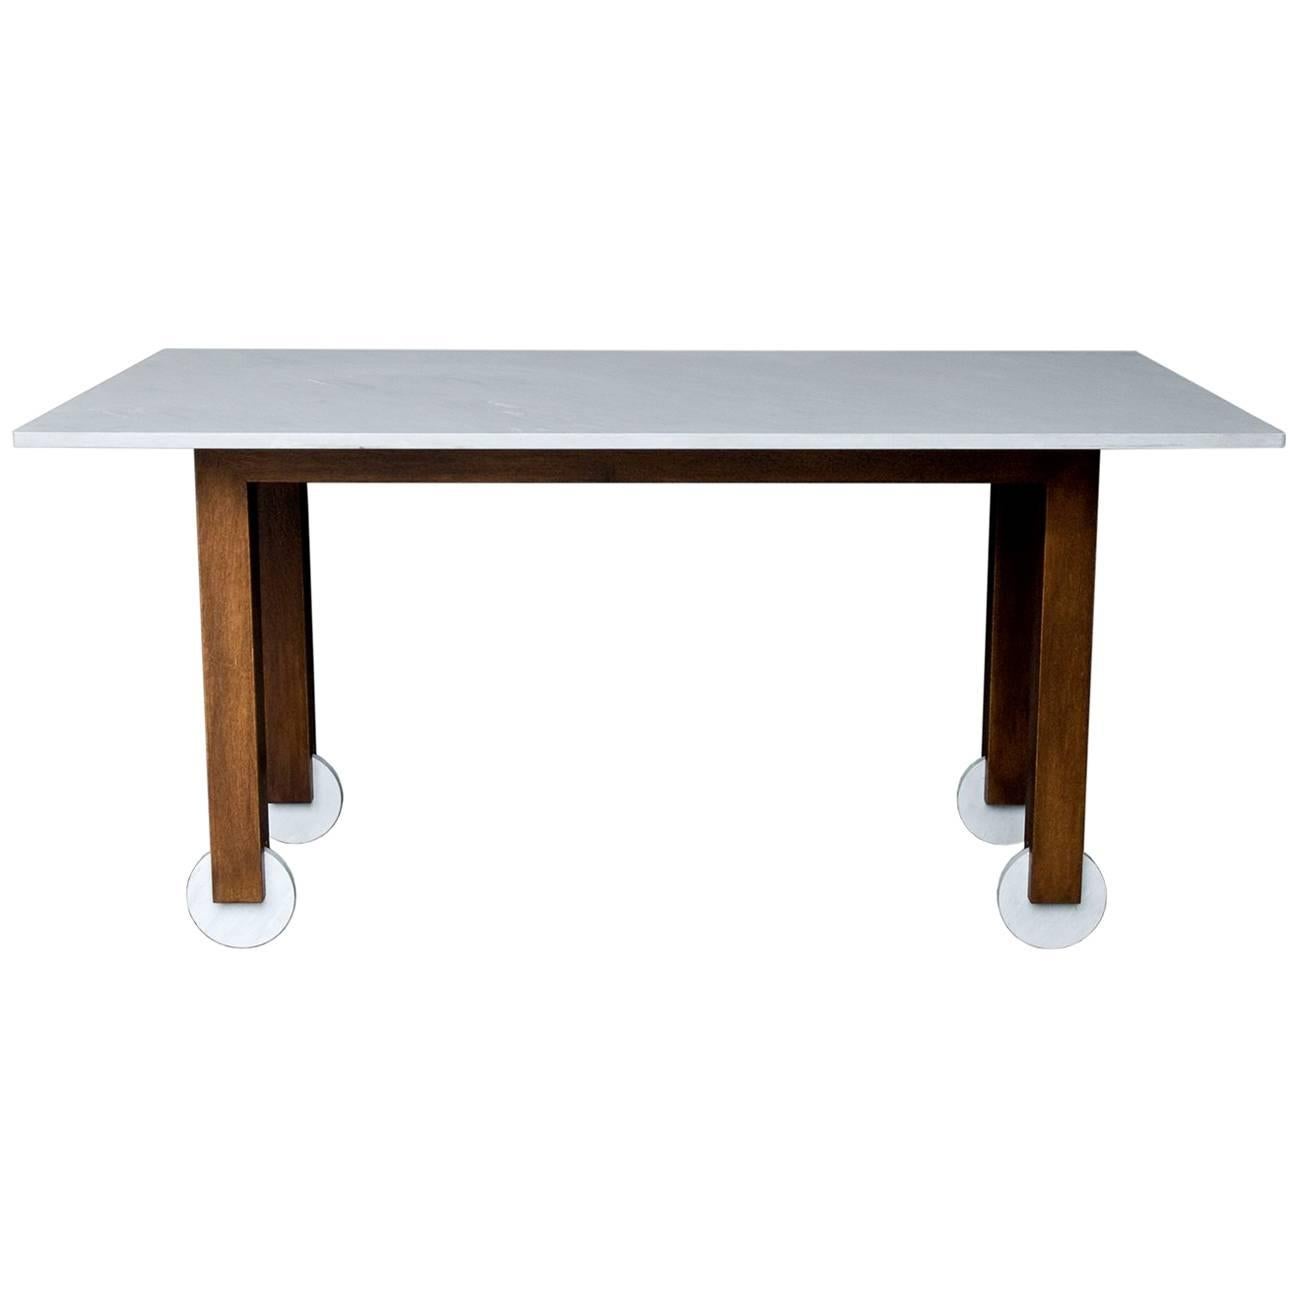 Giuliano Table